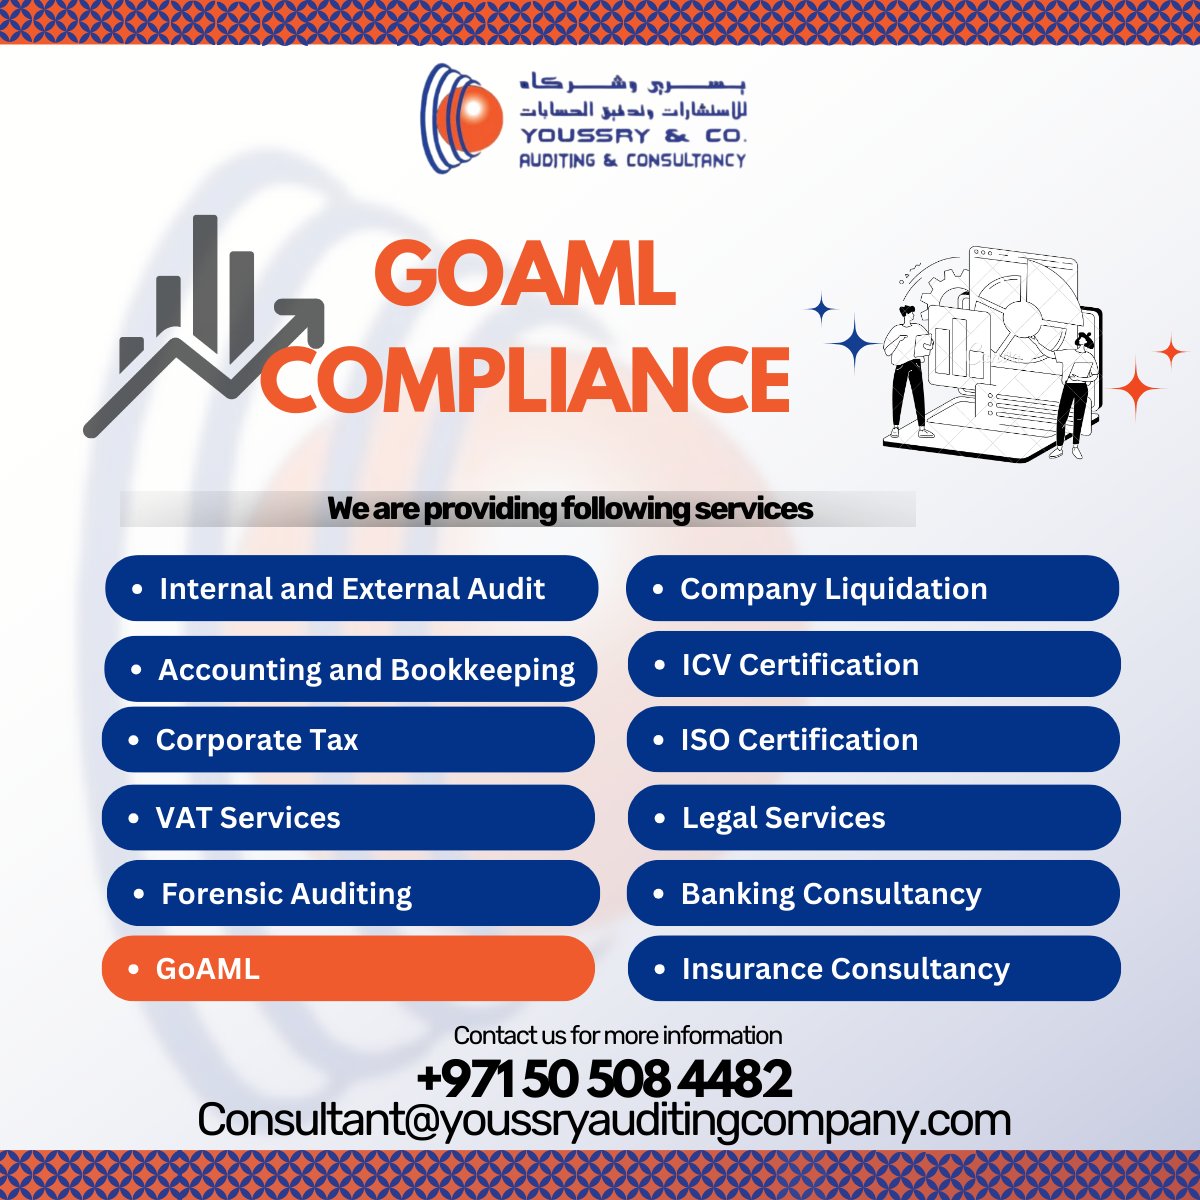 #1 UAE's Most Trusted goAML Consultancy

Anti Money Laundering Registration In UAE
#Accounting #goAML #compliance #businessuae #taxconsultants #abudhabi #sharjah #ajmer #uaebusinesssetup 
#auditingservices